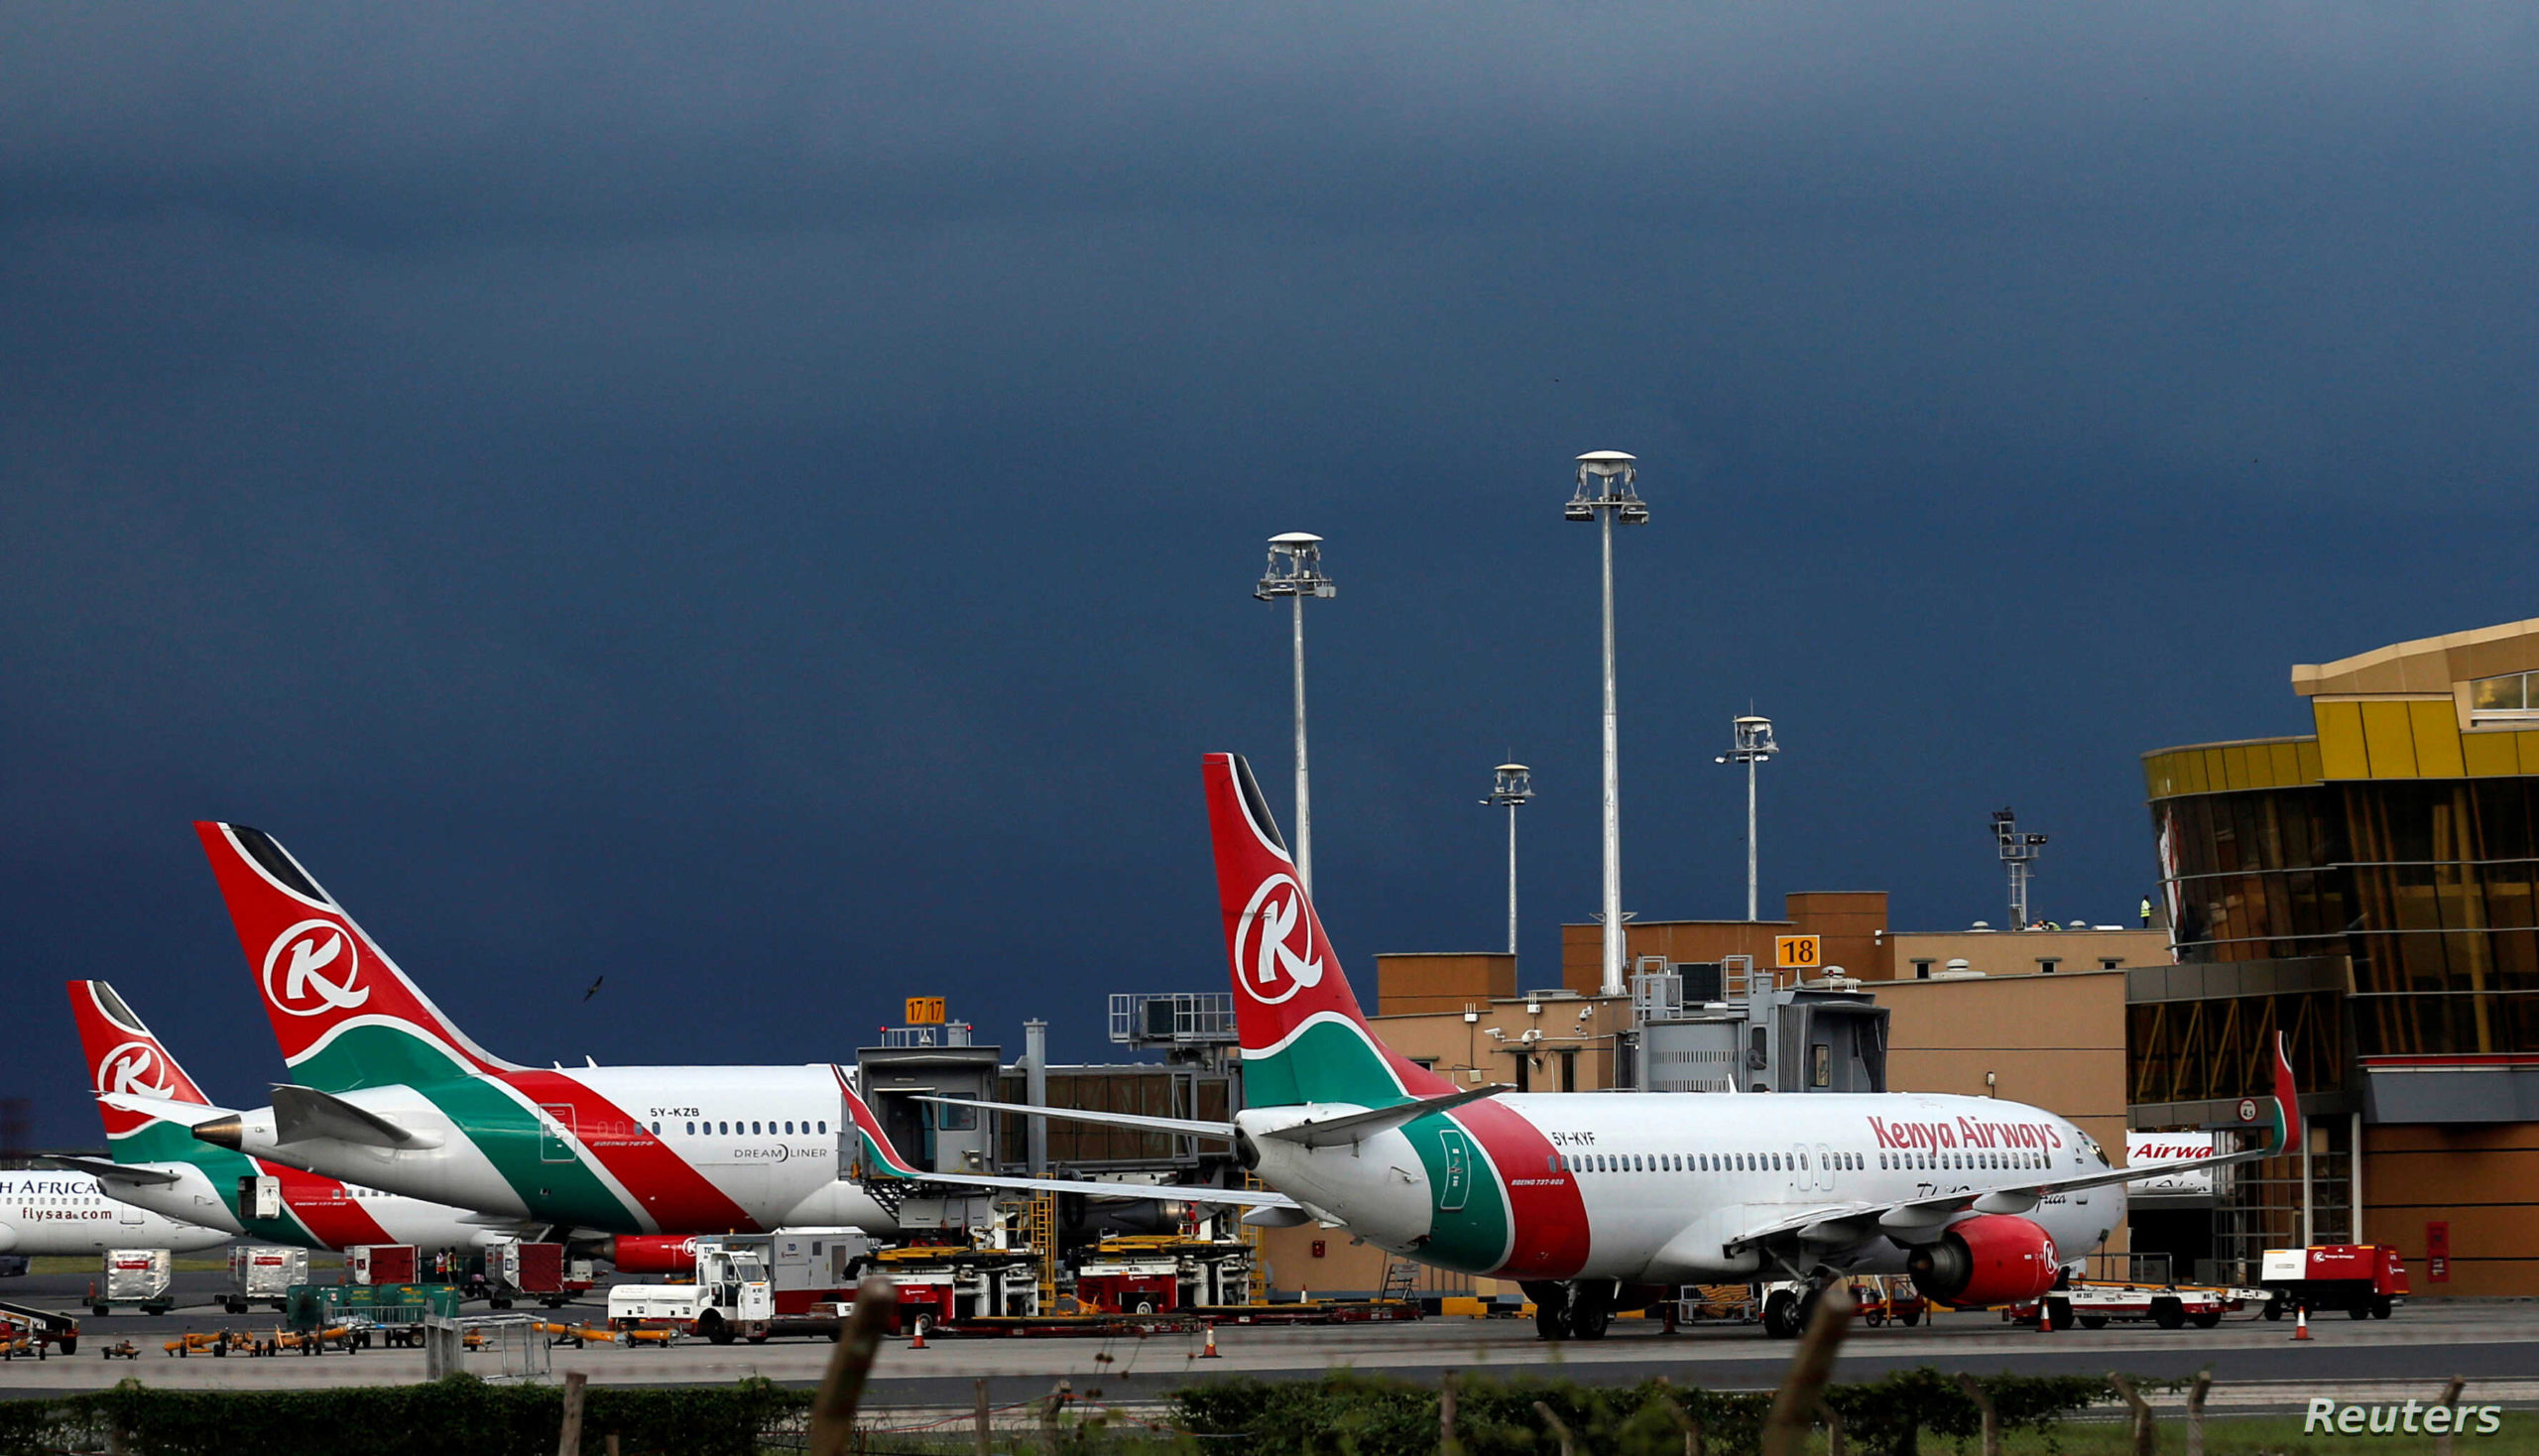 Kenya Airways signs for Boeing landing gear exchange services